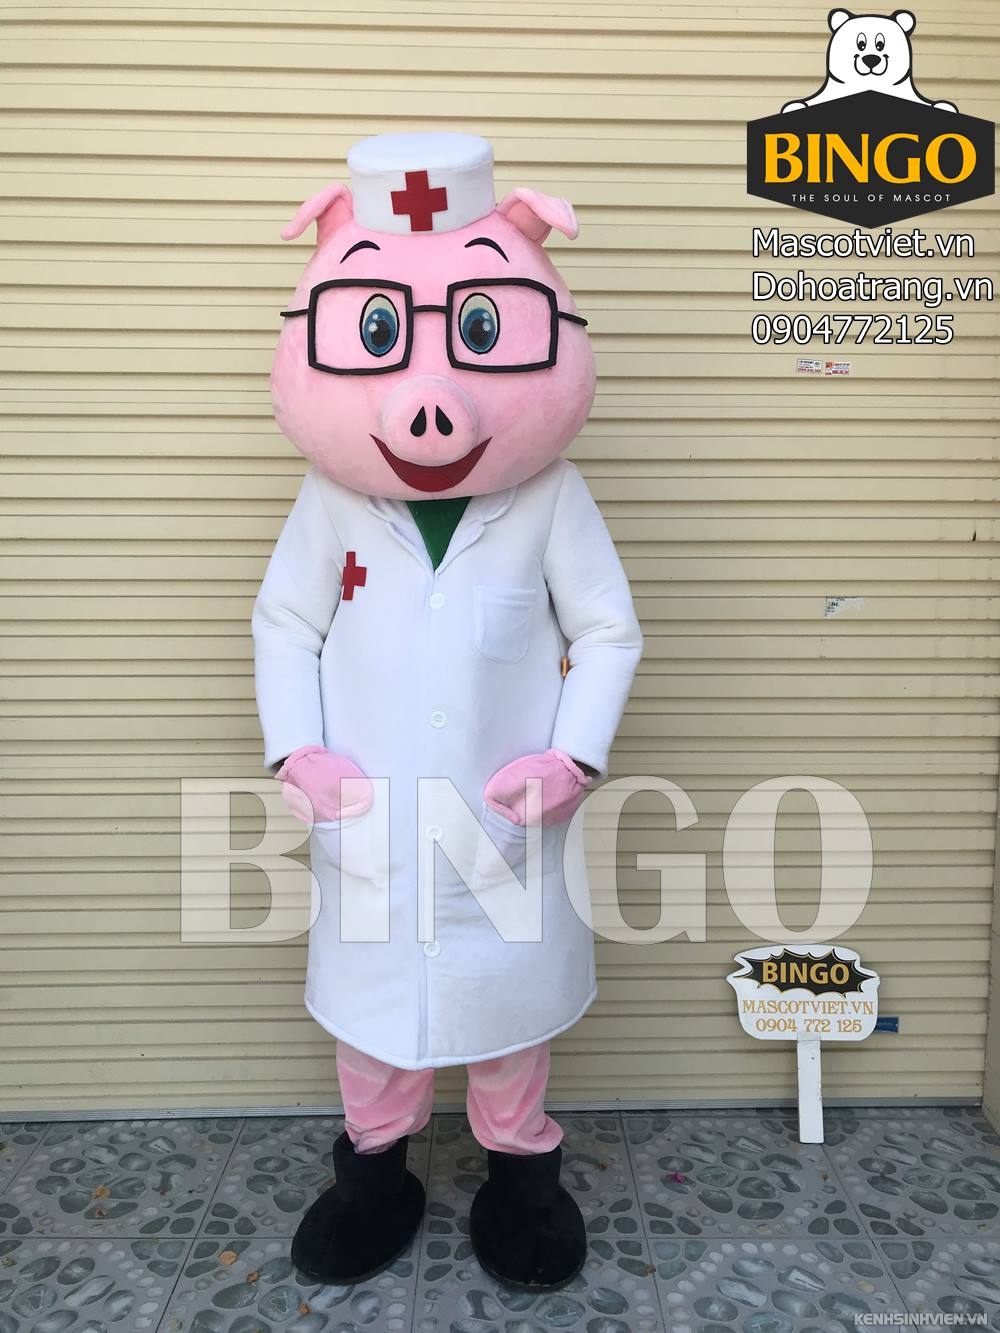 mascot-con-heo-bac-si-bingo-costumes-0904772125.jpg